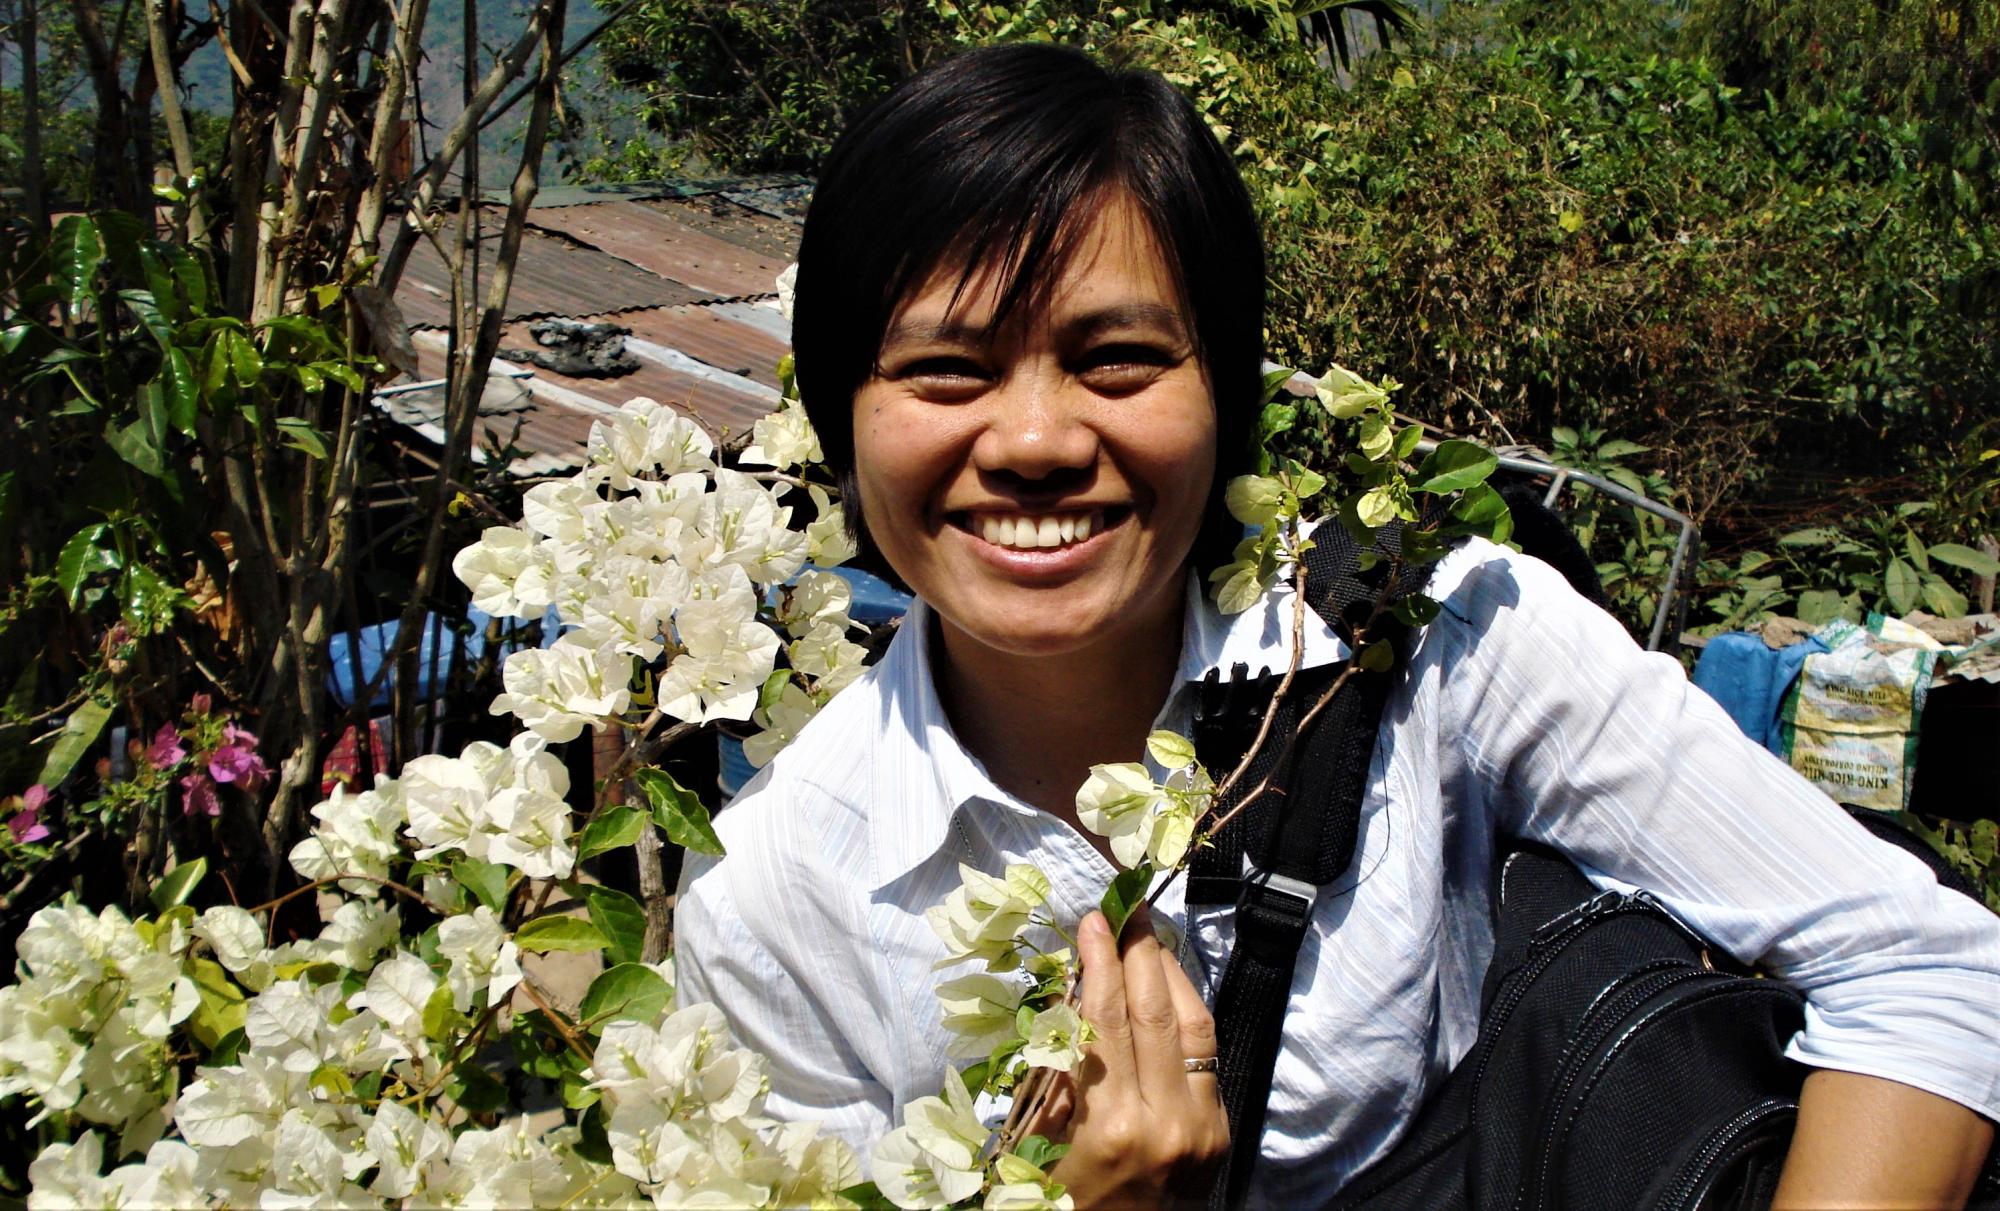 Sister Agustina enjoys white flowers